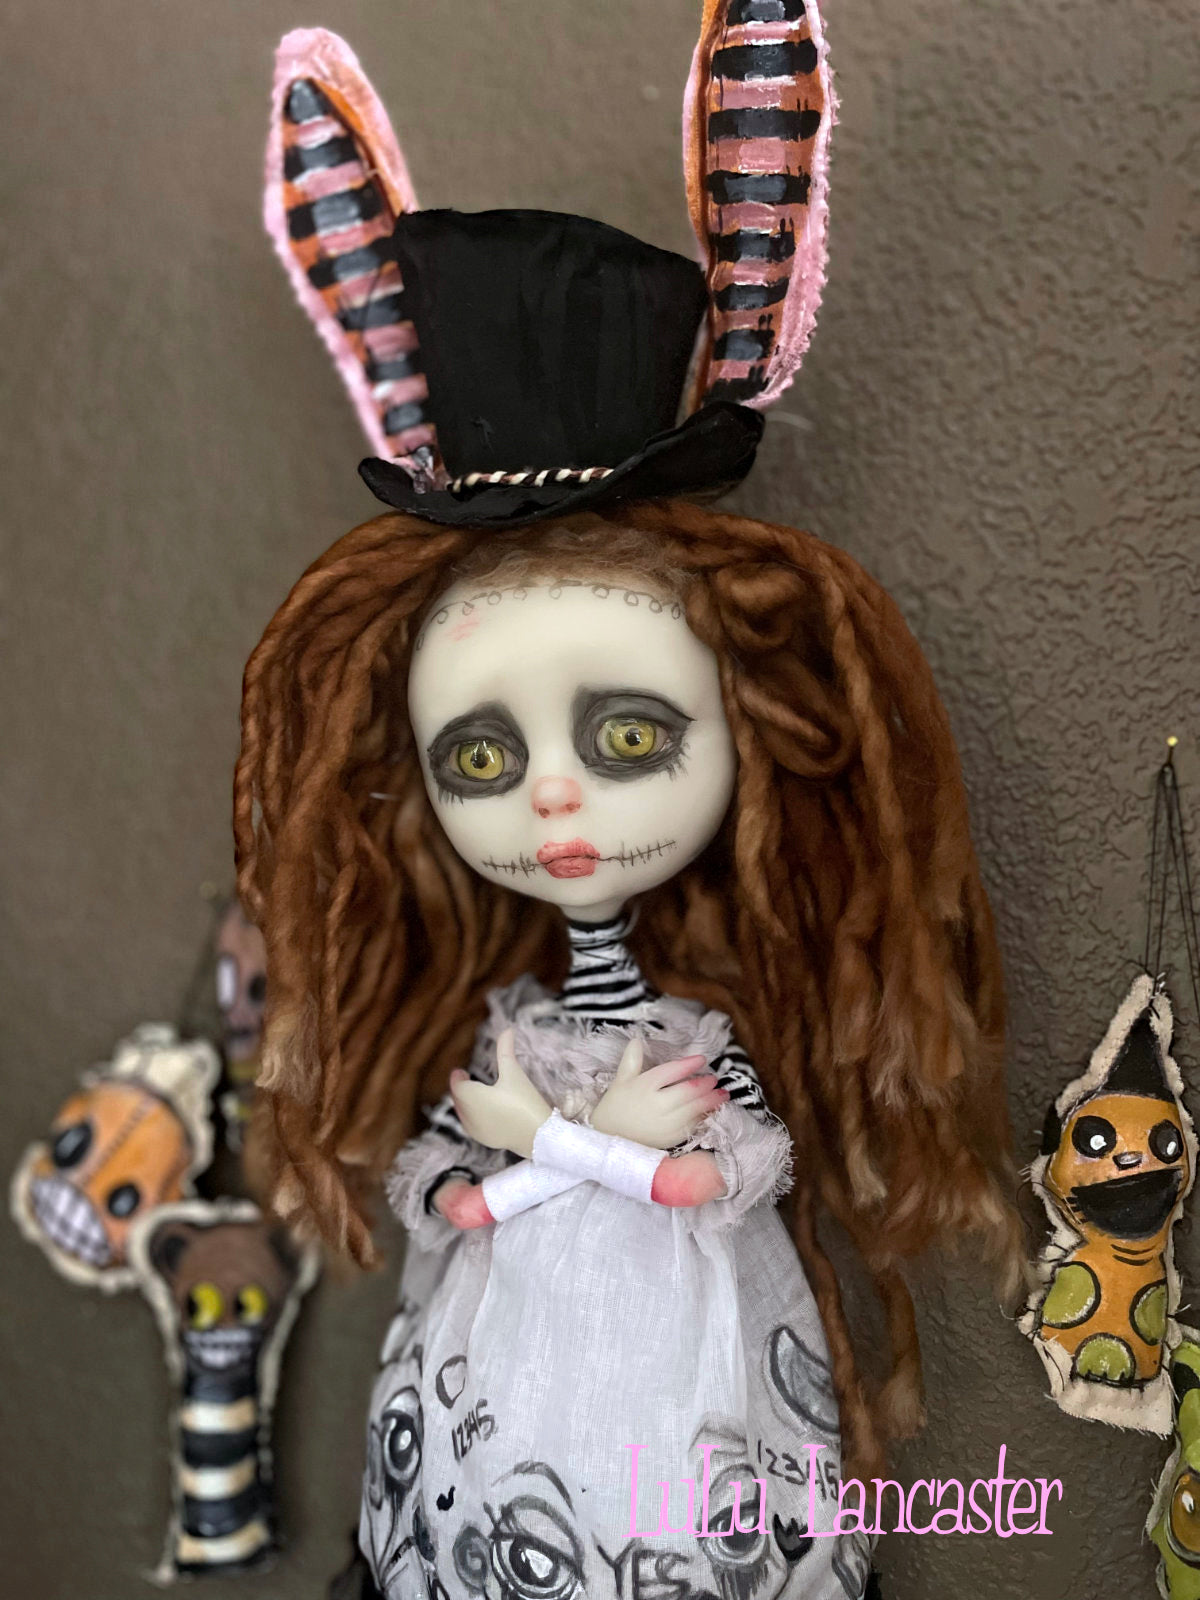 Embrette Little Nightmares Goth Bunny Original LuLu Lancaster Art Doll